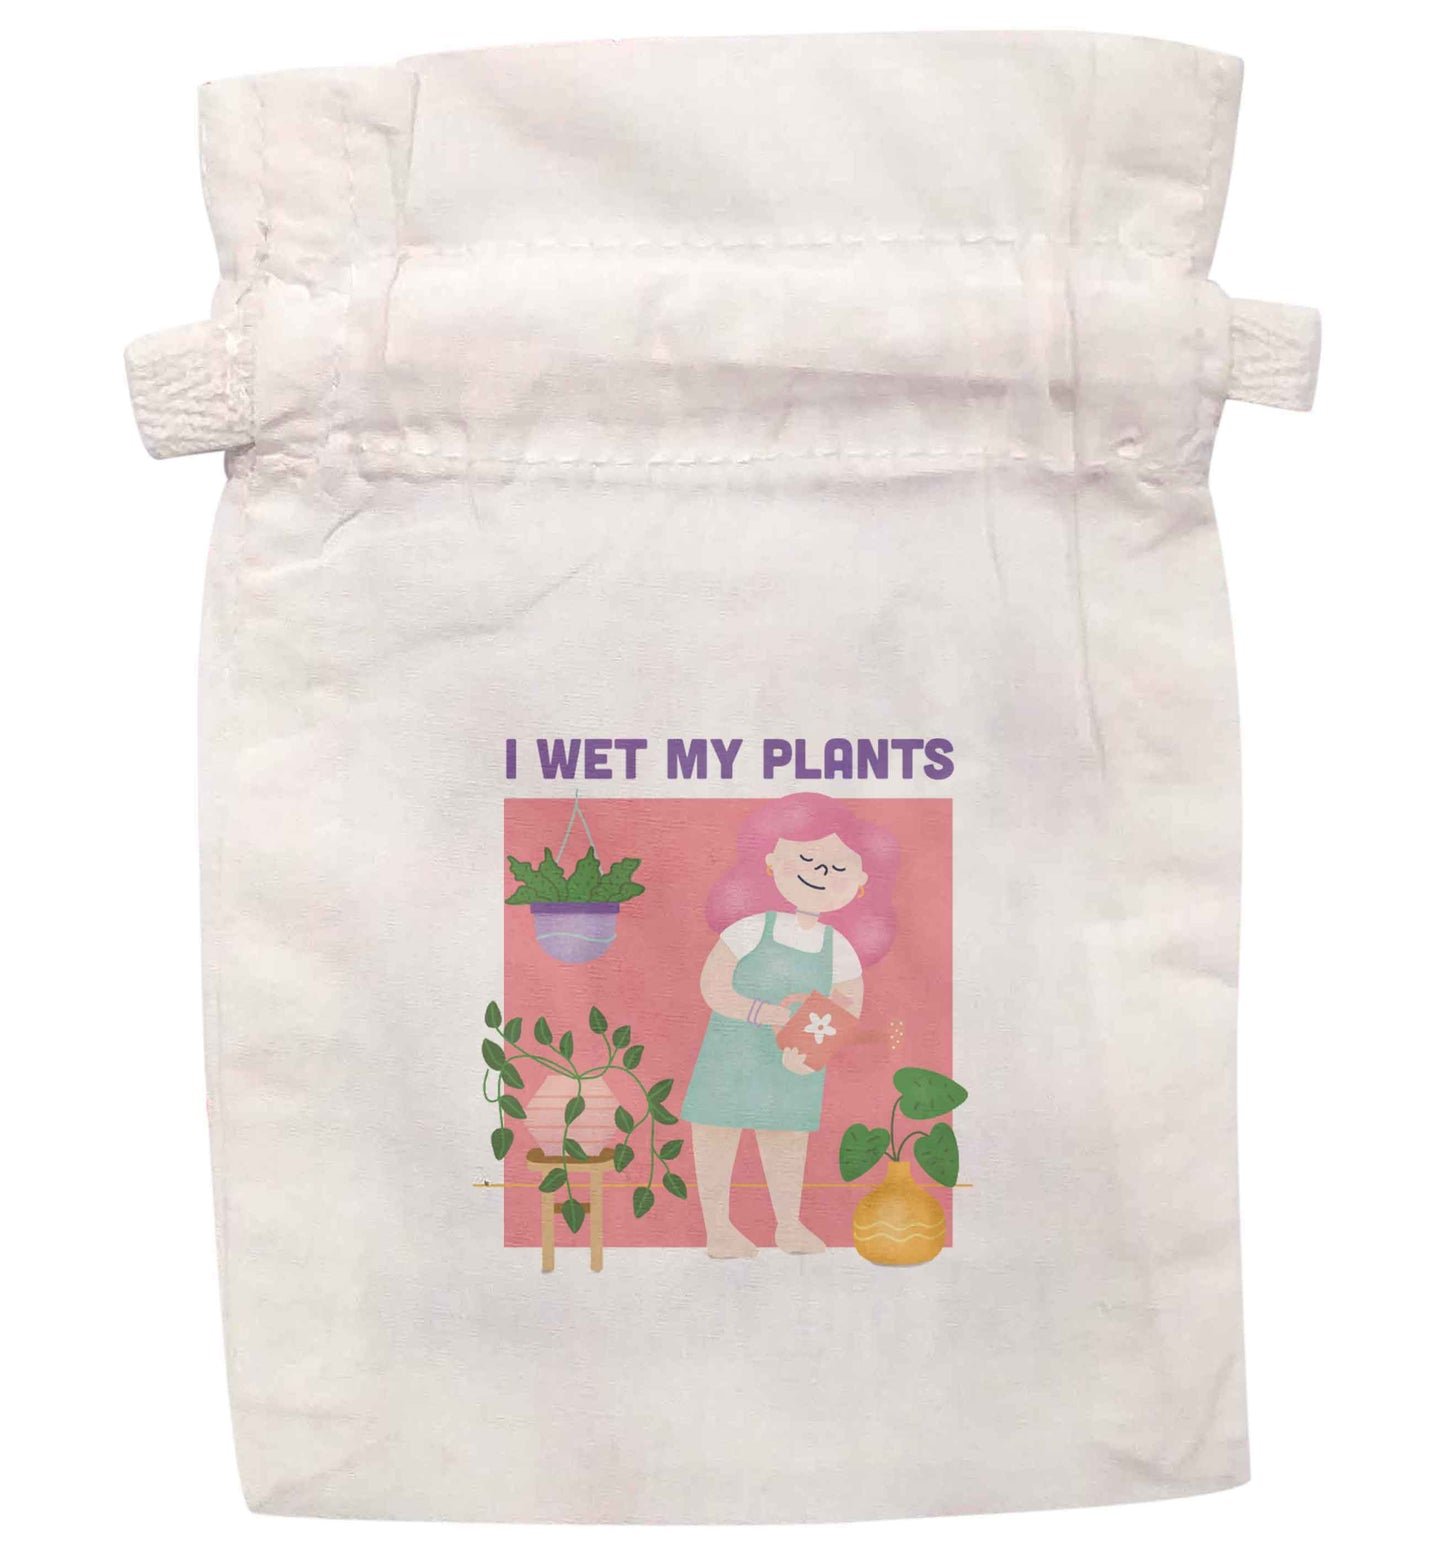 I wet my plants | XS - L | Pouch / Drawstring bag / Sack | Organic Cotton | Bulk discounts available!